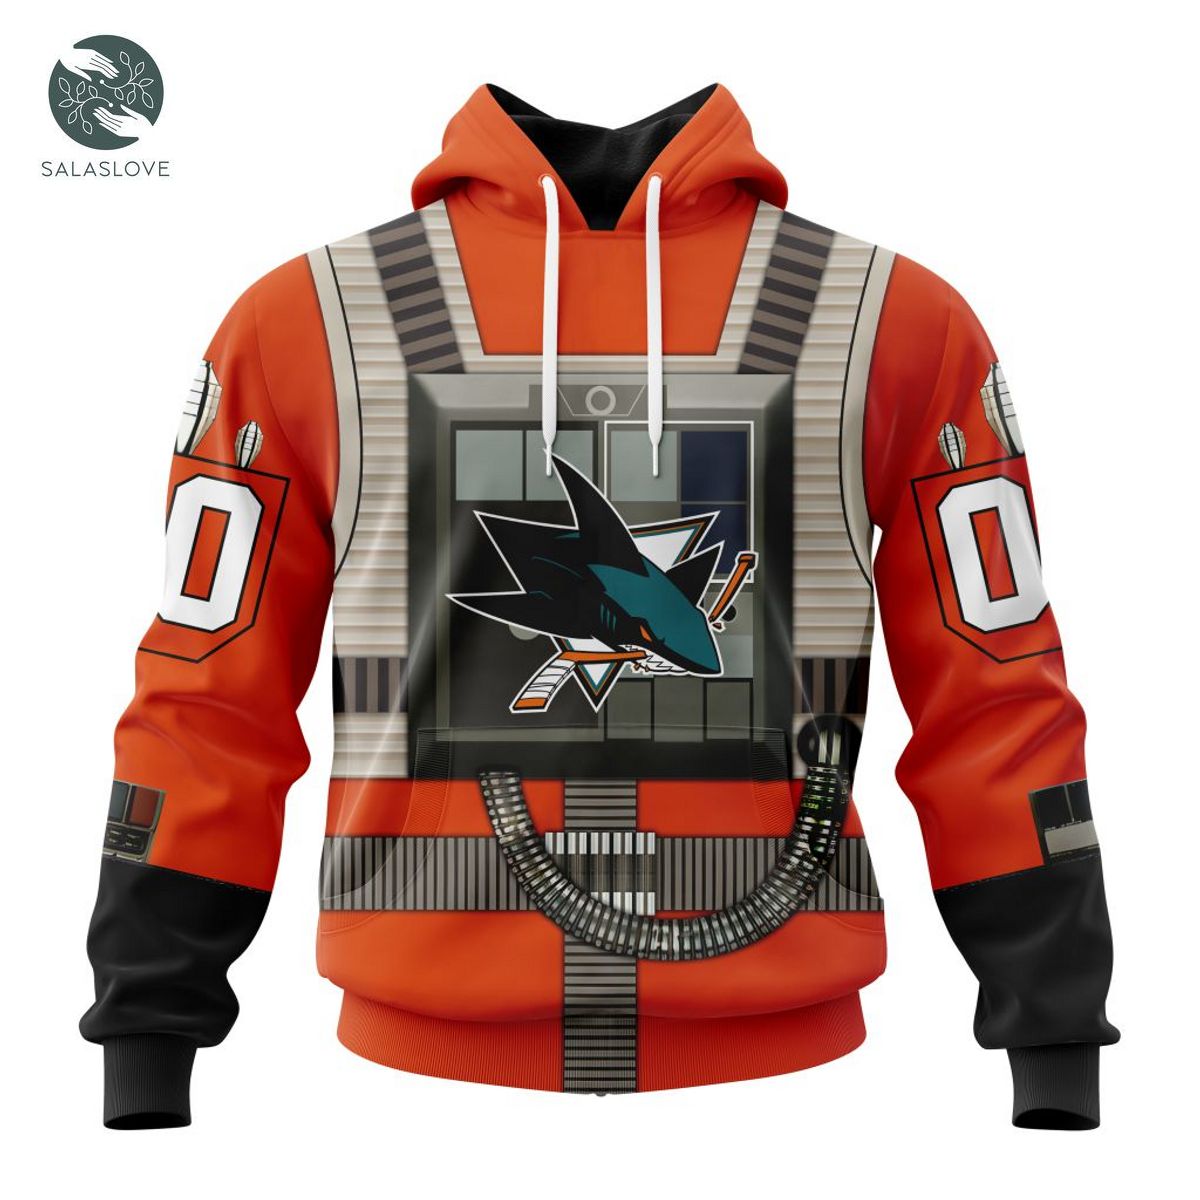 NHL San Jose Sharks Star Wars Rebel Pilot Design Hoodie